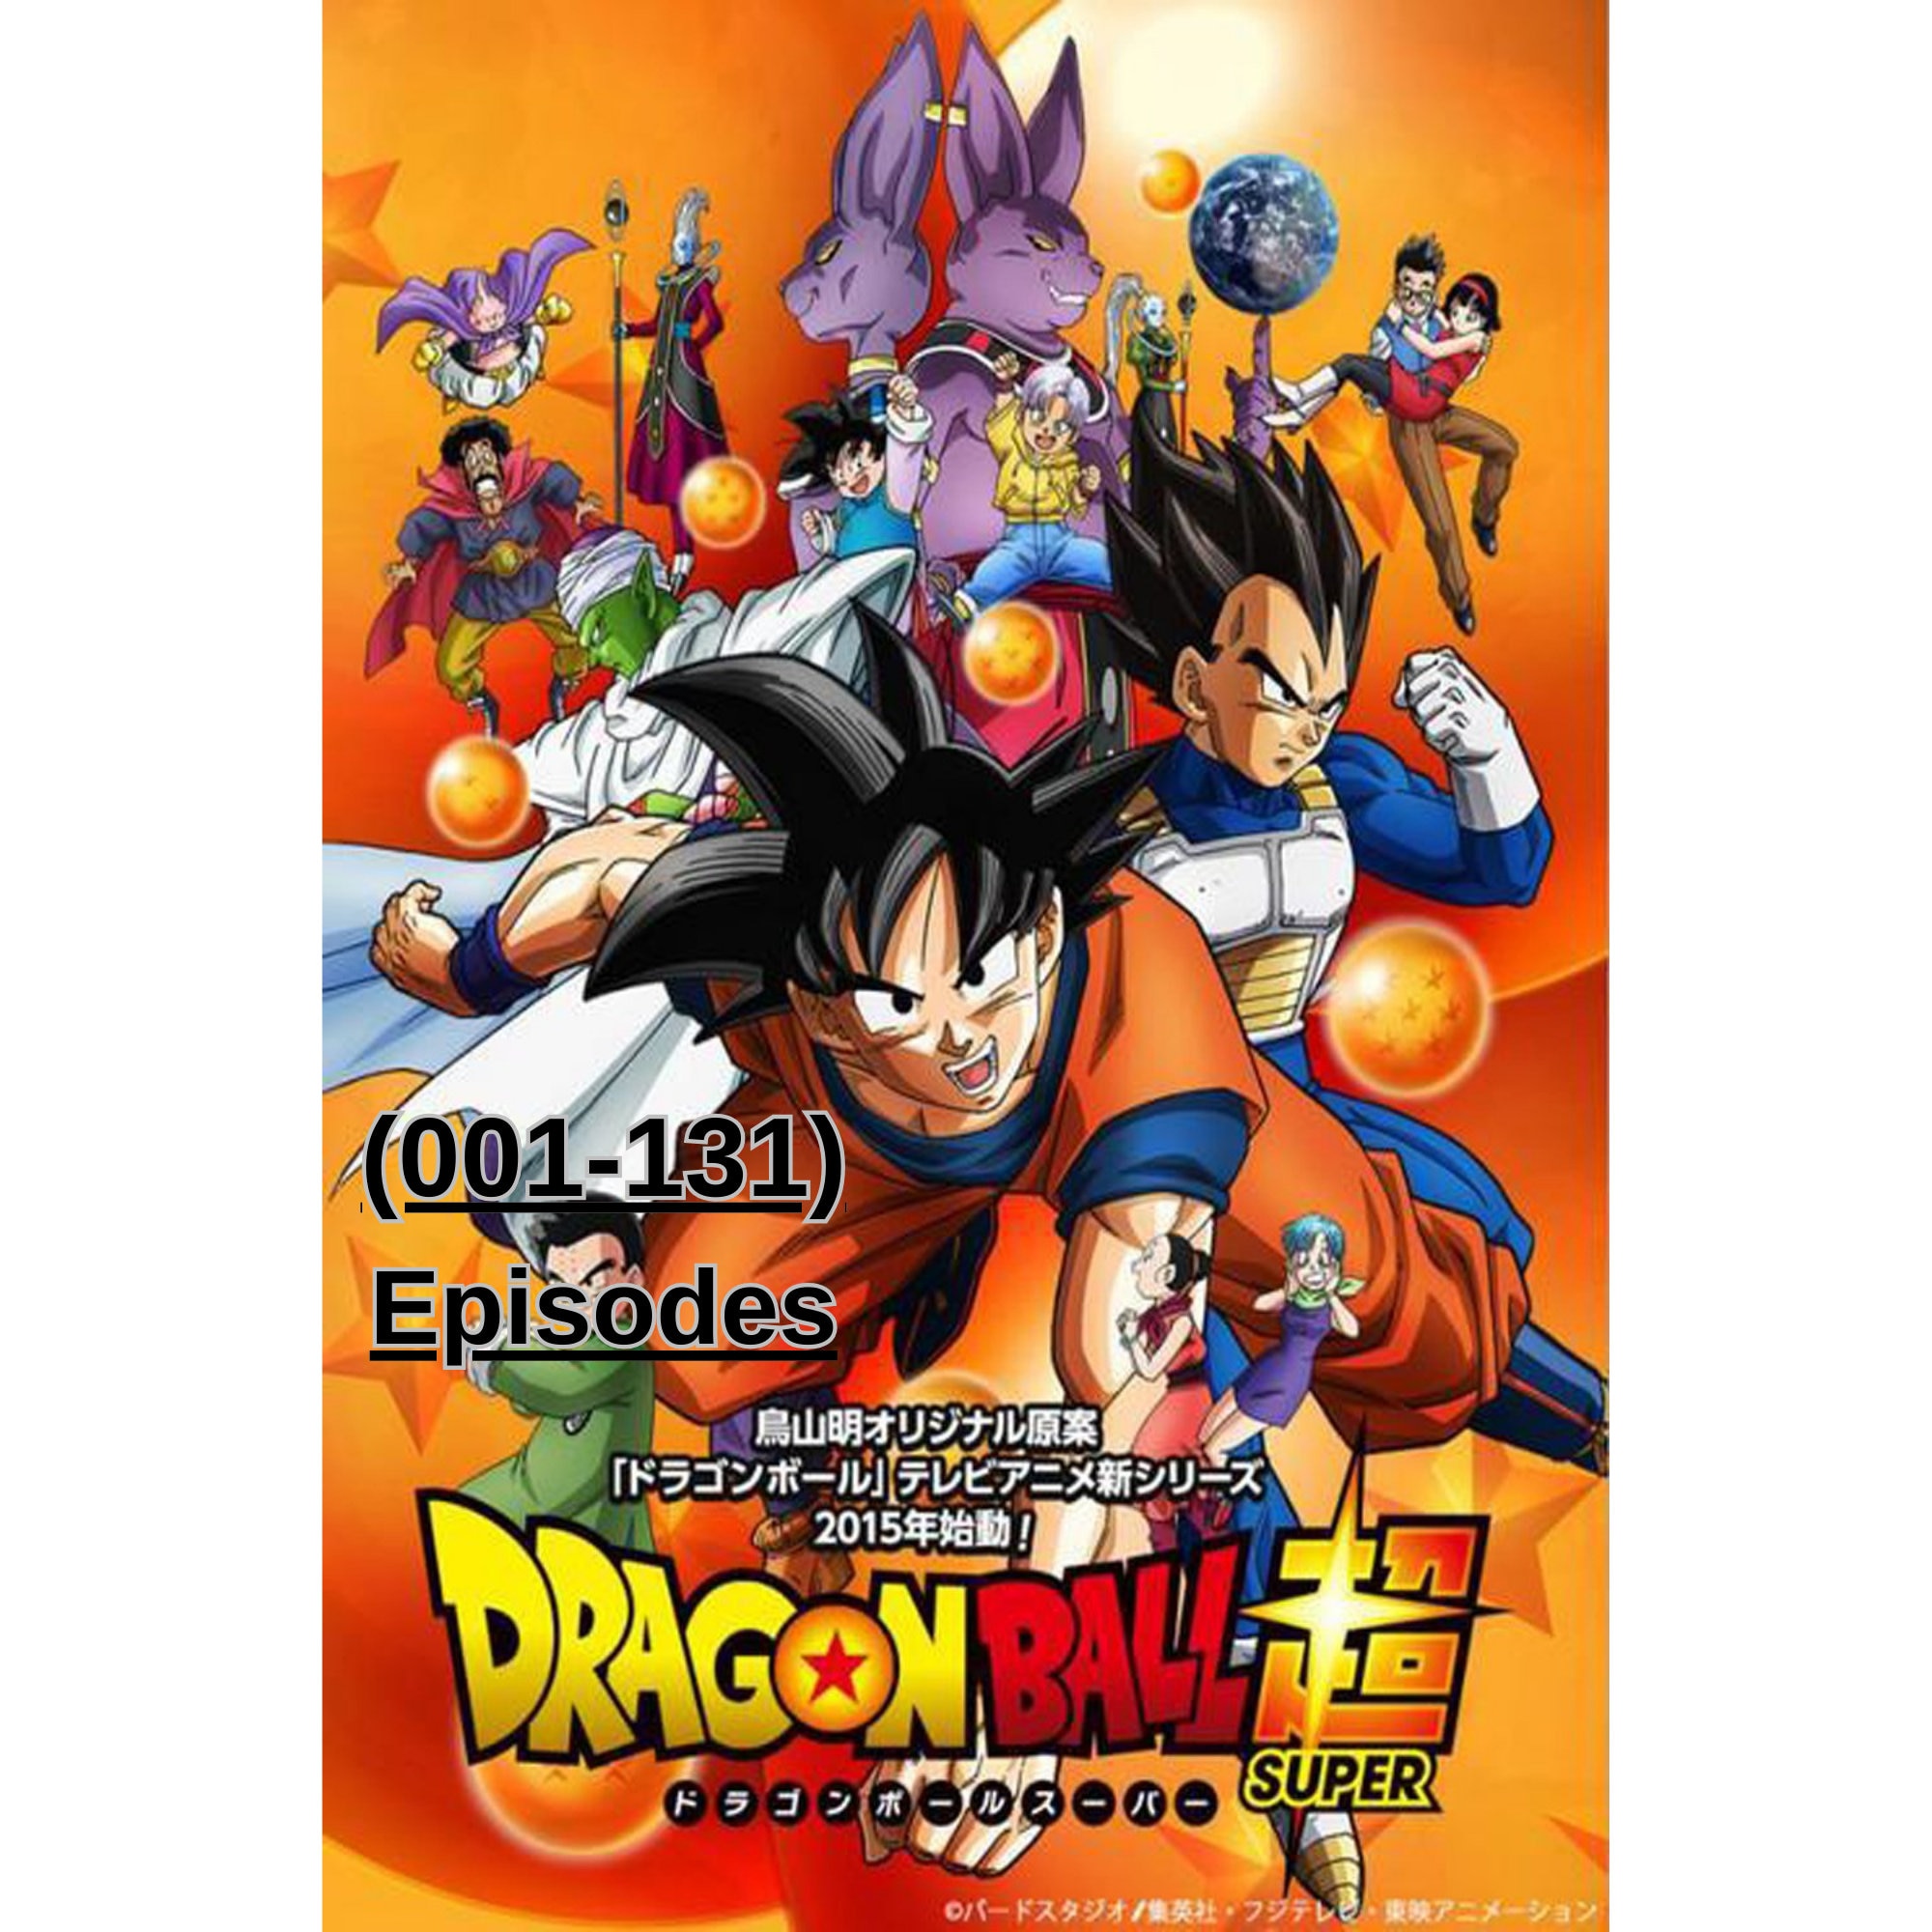 DVD Dragonball Z Ep 1-291End. English Dub. Dual audio